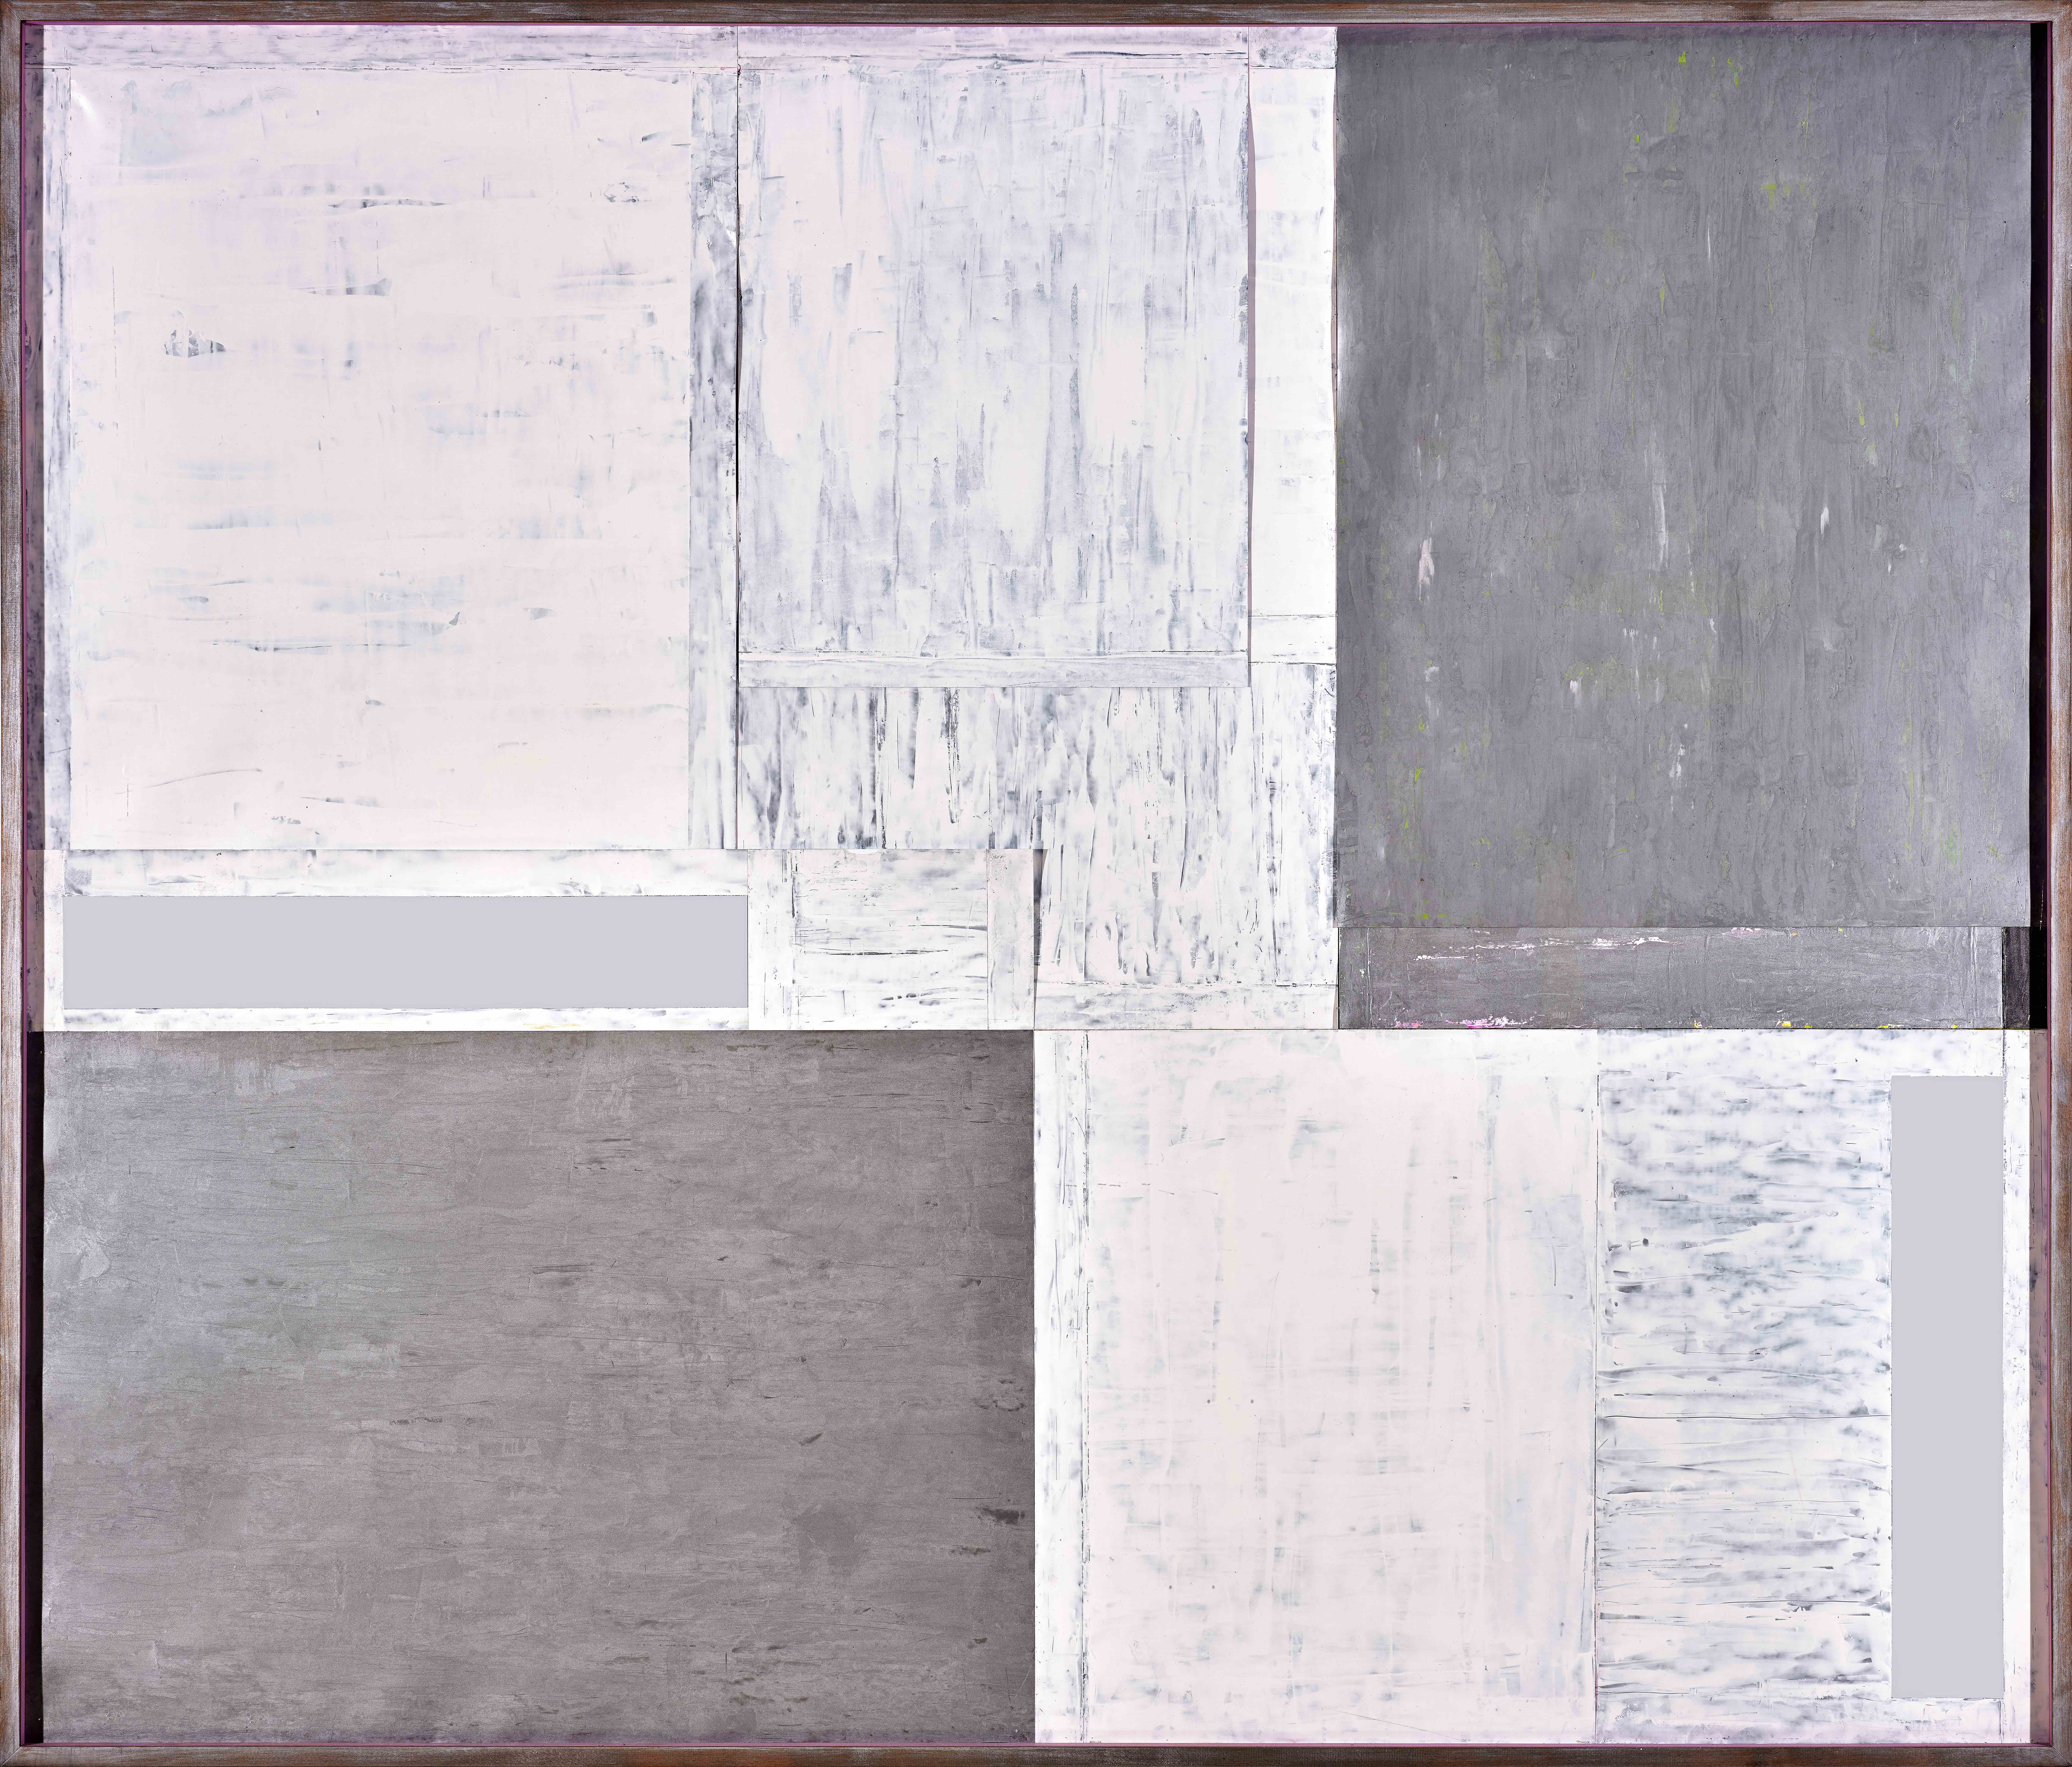 AMTN II, 2019. Mixed technique on metallic cardboard. 173 x 203 x 7 cm